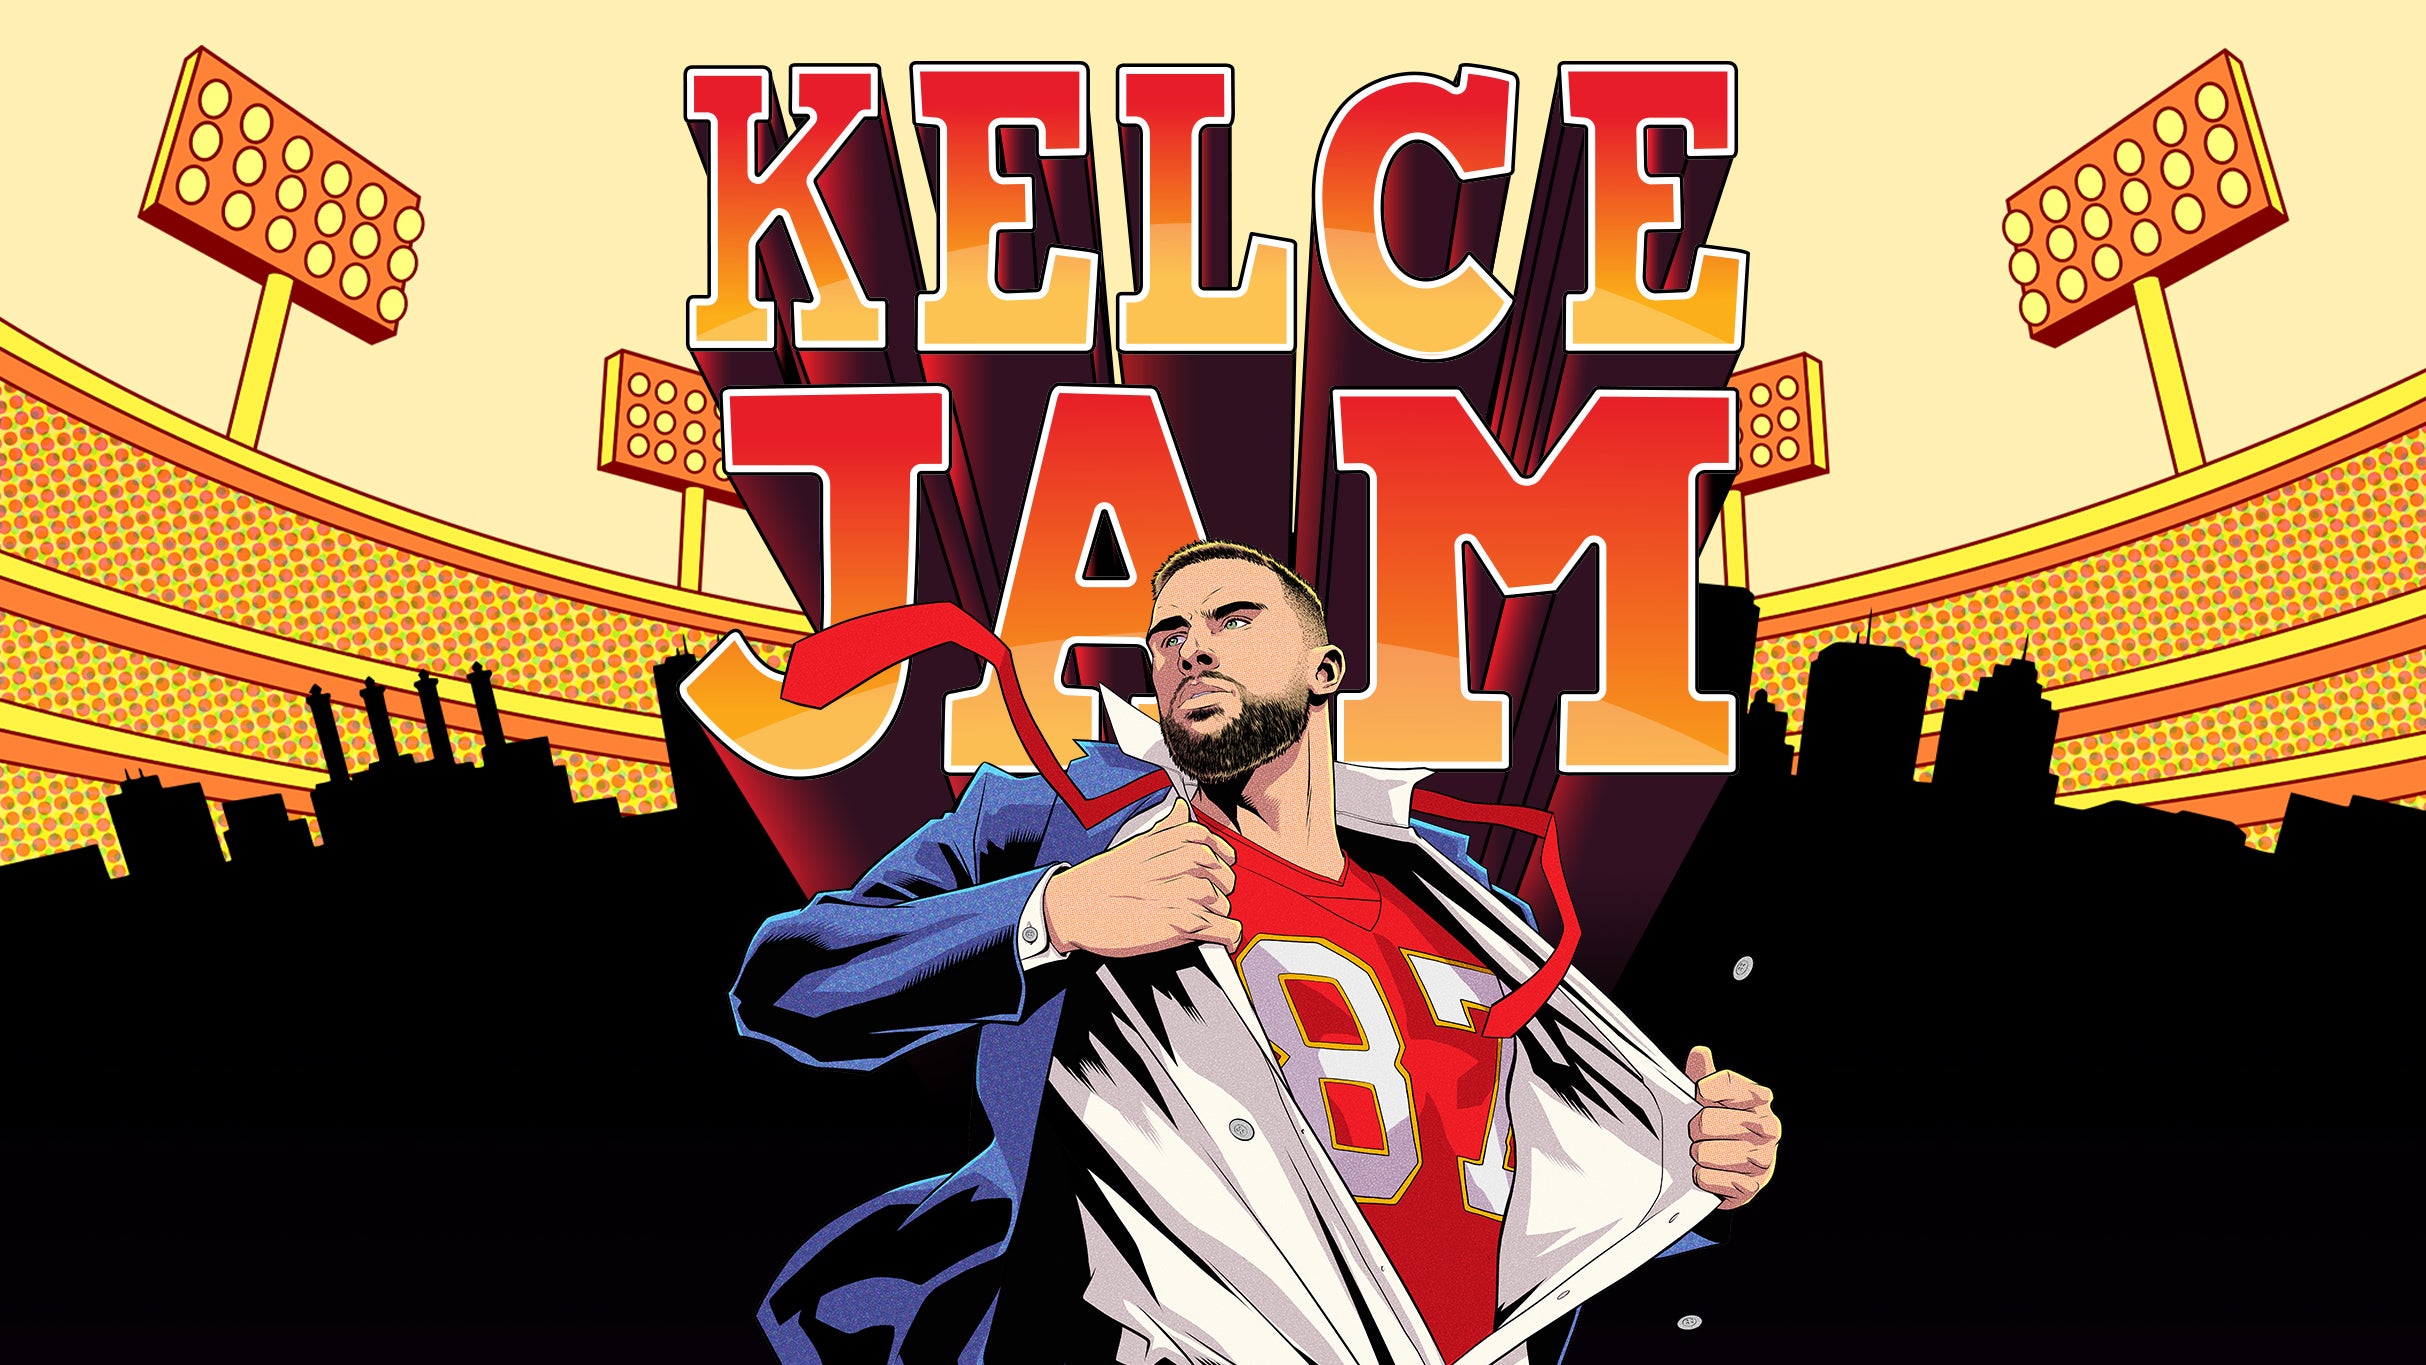 Kelce Jam free presale code for early tickets in Bonner Springs